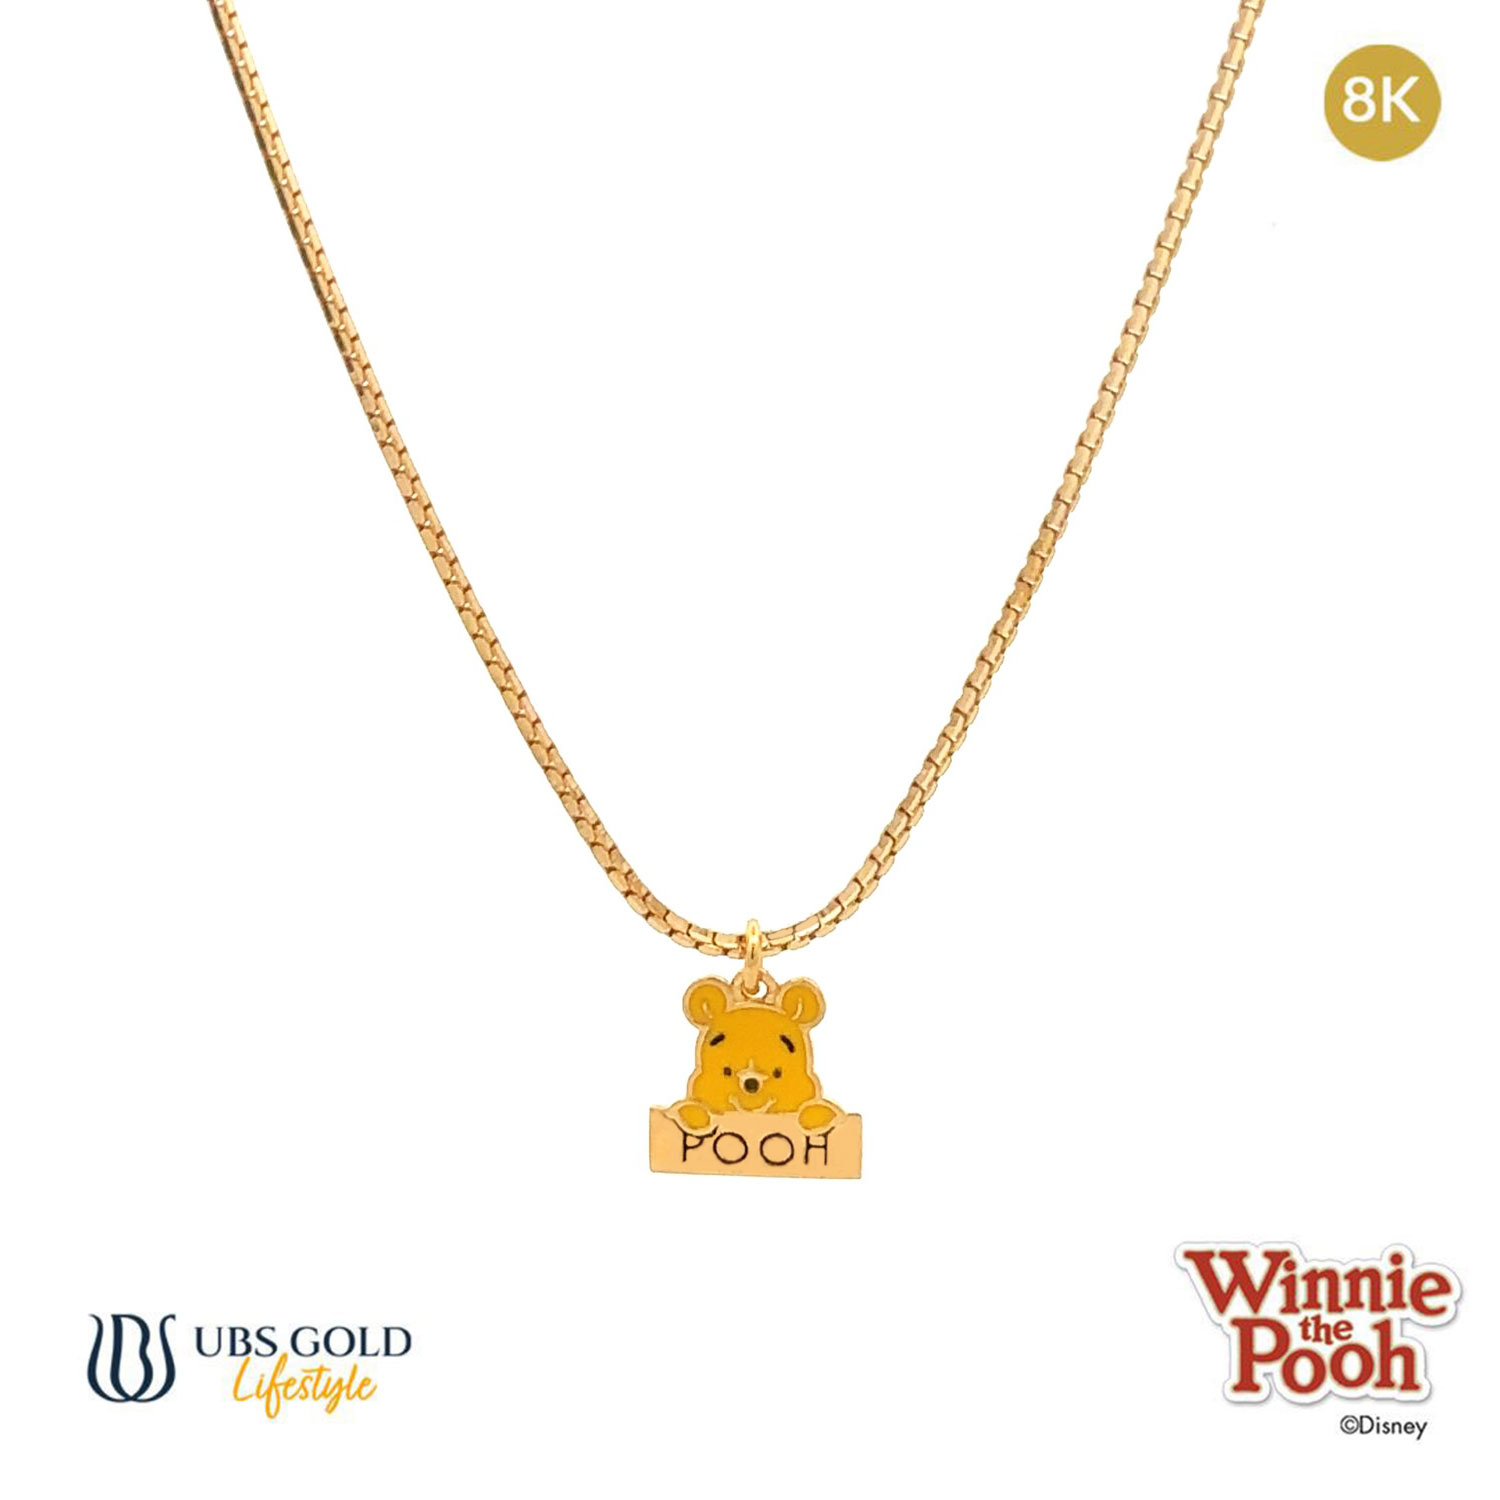 UBS Kalung Emas Anak Disney Winnie The Pooh - Kky0423K - 8K